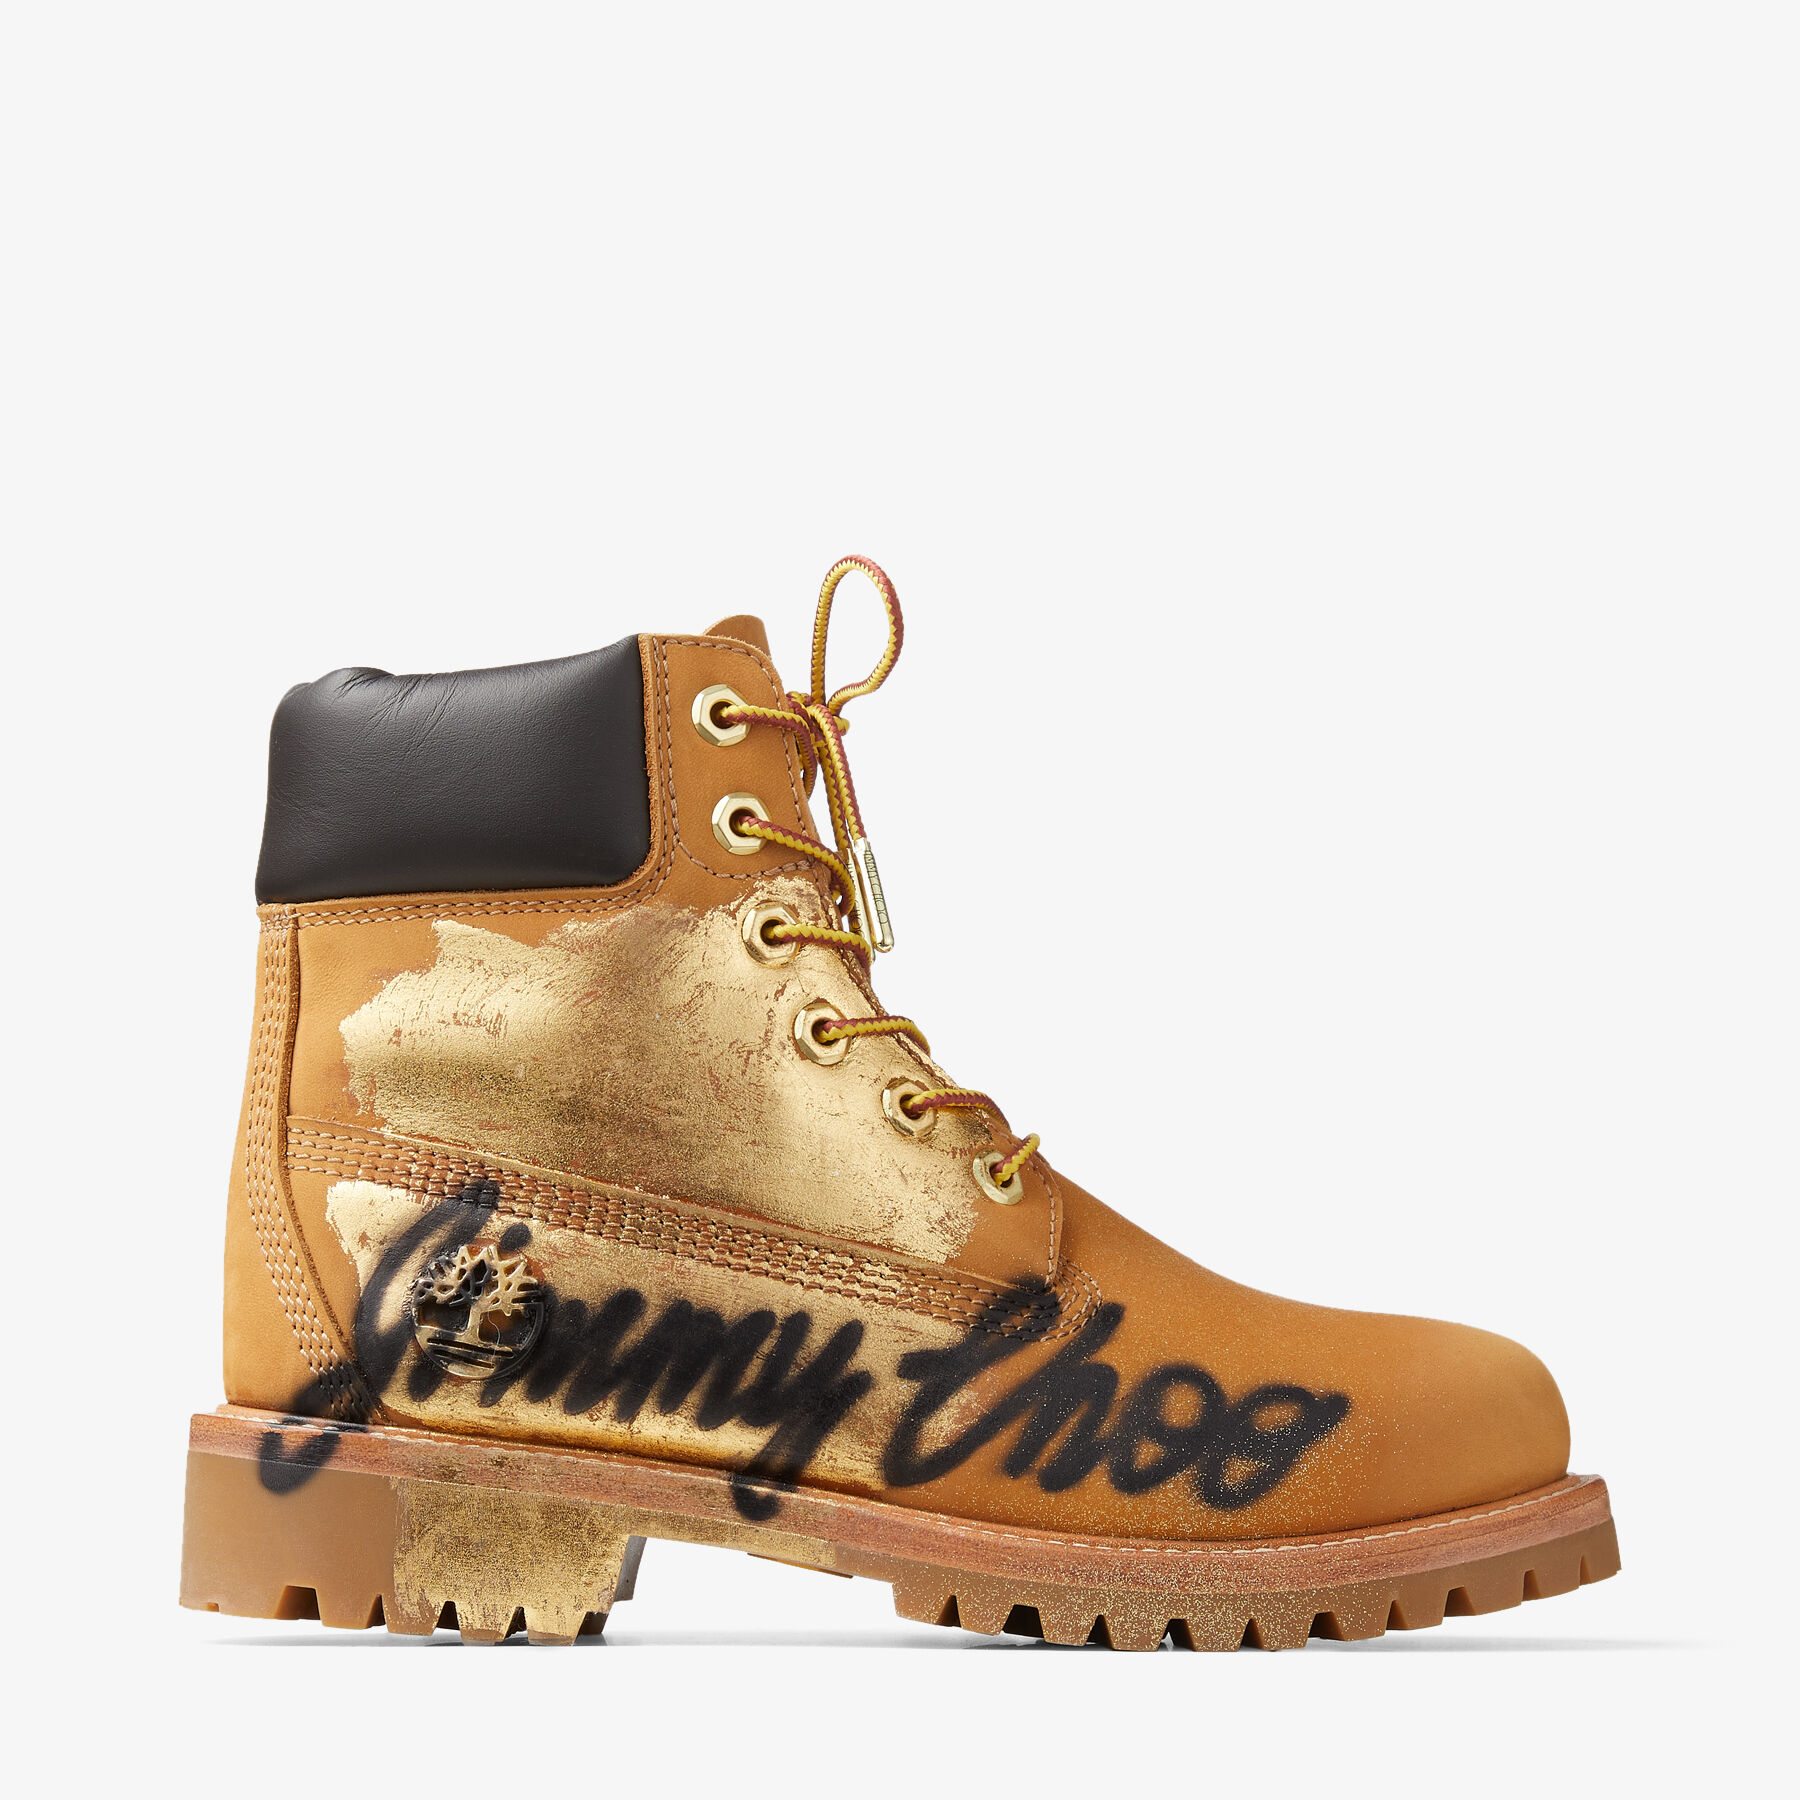 Pelagisch Mompelen President Wheat Timberland Nubuck Ankle Boots with Jimmy Choo Graffiti | JIMMY CHOO X  TIMBERLAND 6 INCH GRAFFITI BOOT | Jimmy Choo x Timberland Collection |  JIMMY CHOO